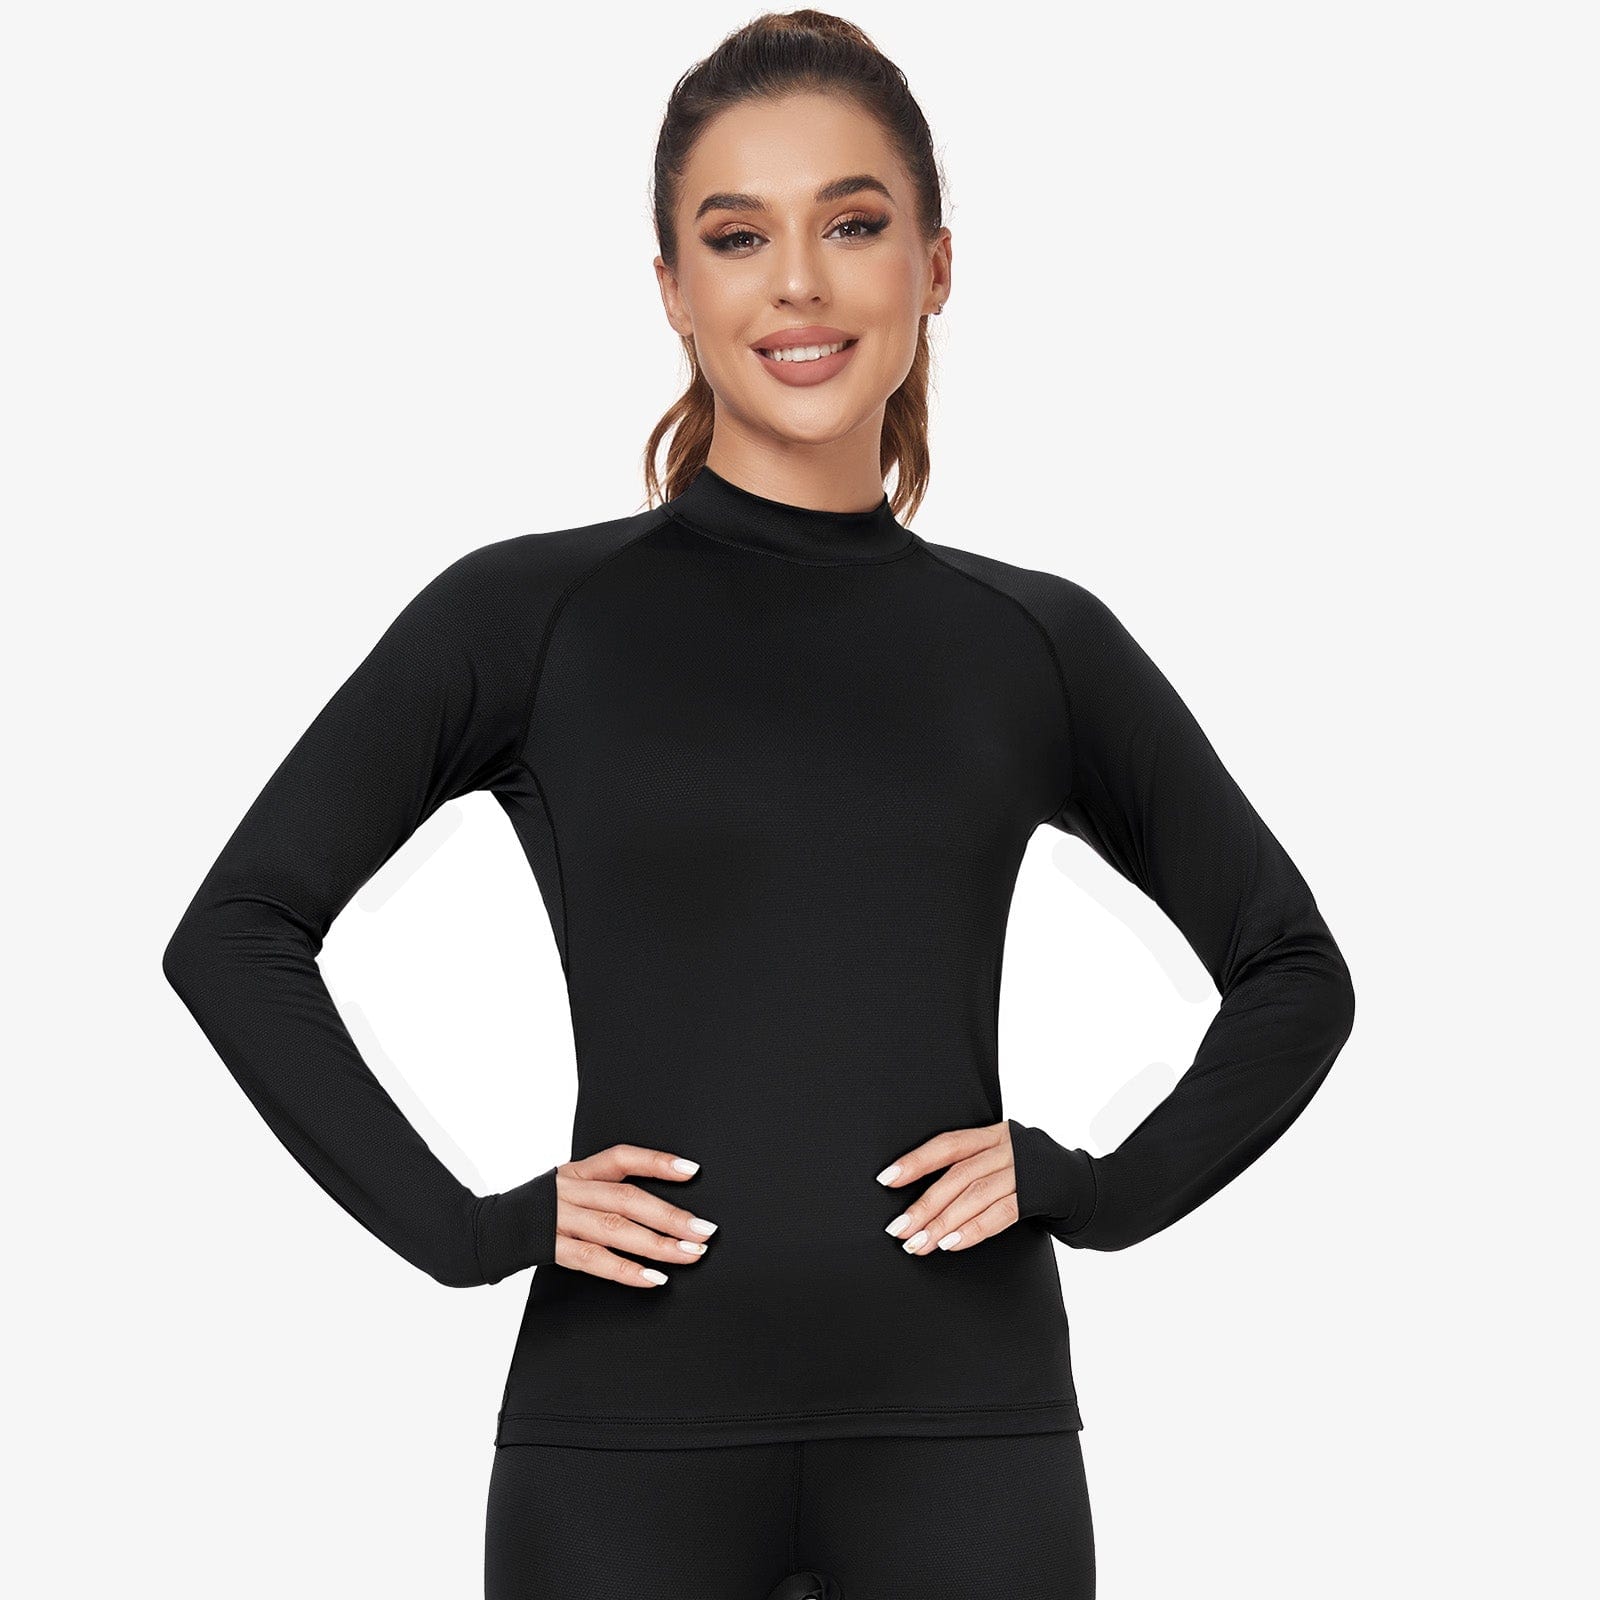 Women's Long Sleeve Mock Turtleneck Base Layer - Black / XL